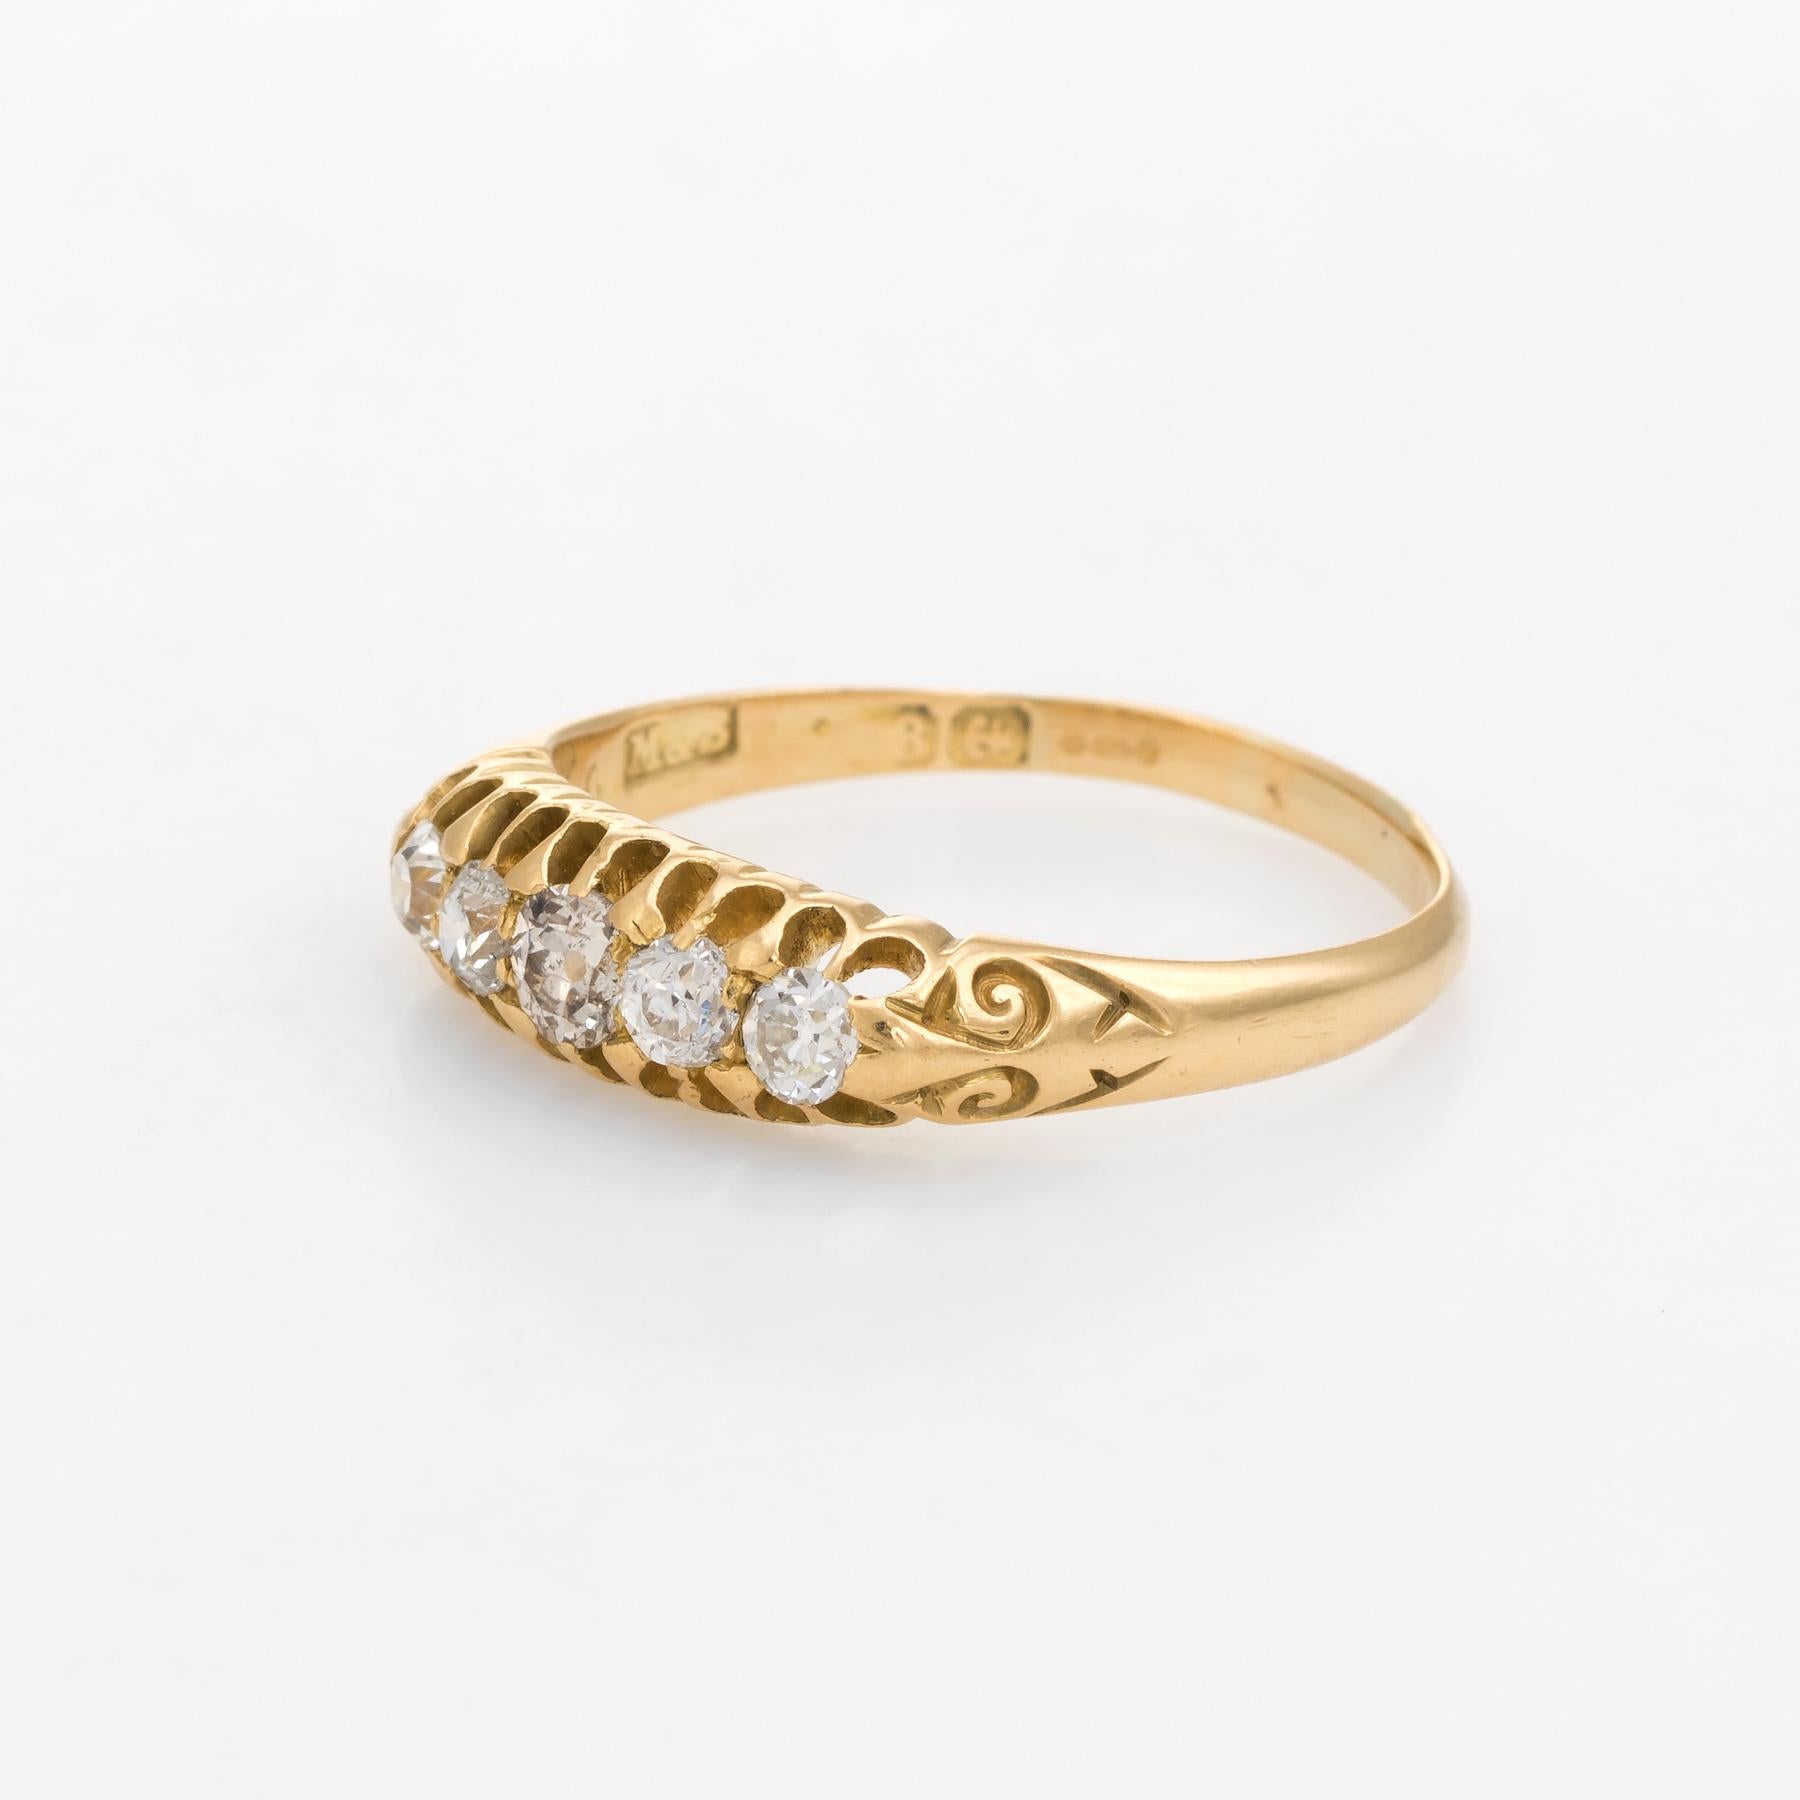 Women's Graduated 5 Old Mine Cut Diamond Ring Antique Edwardian c1907 18k Gold